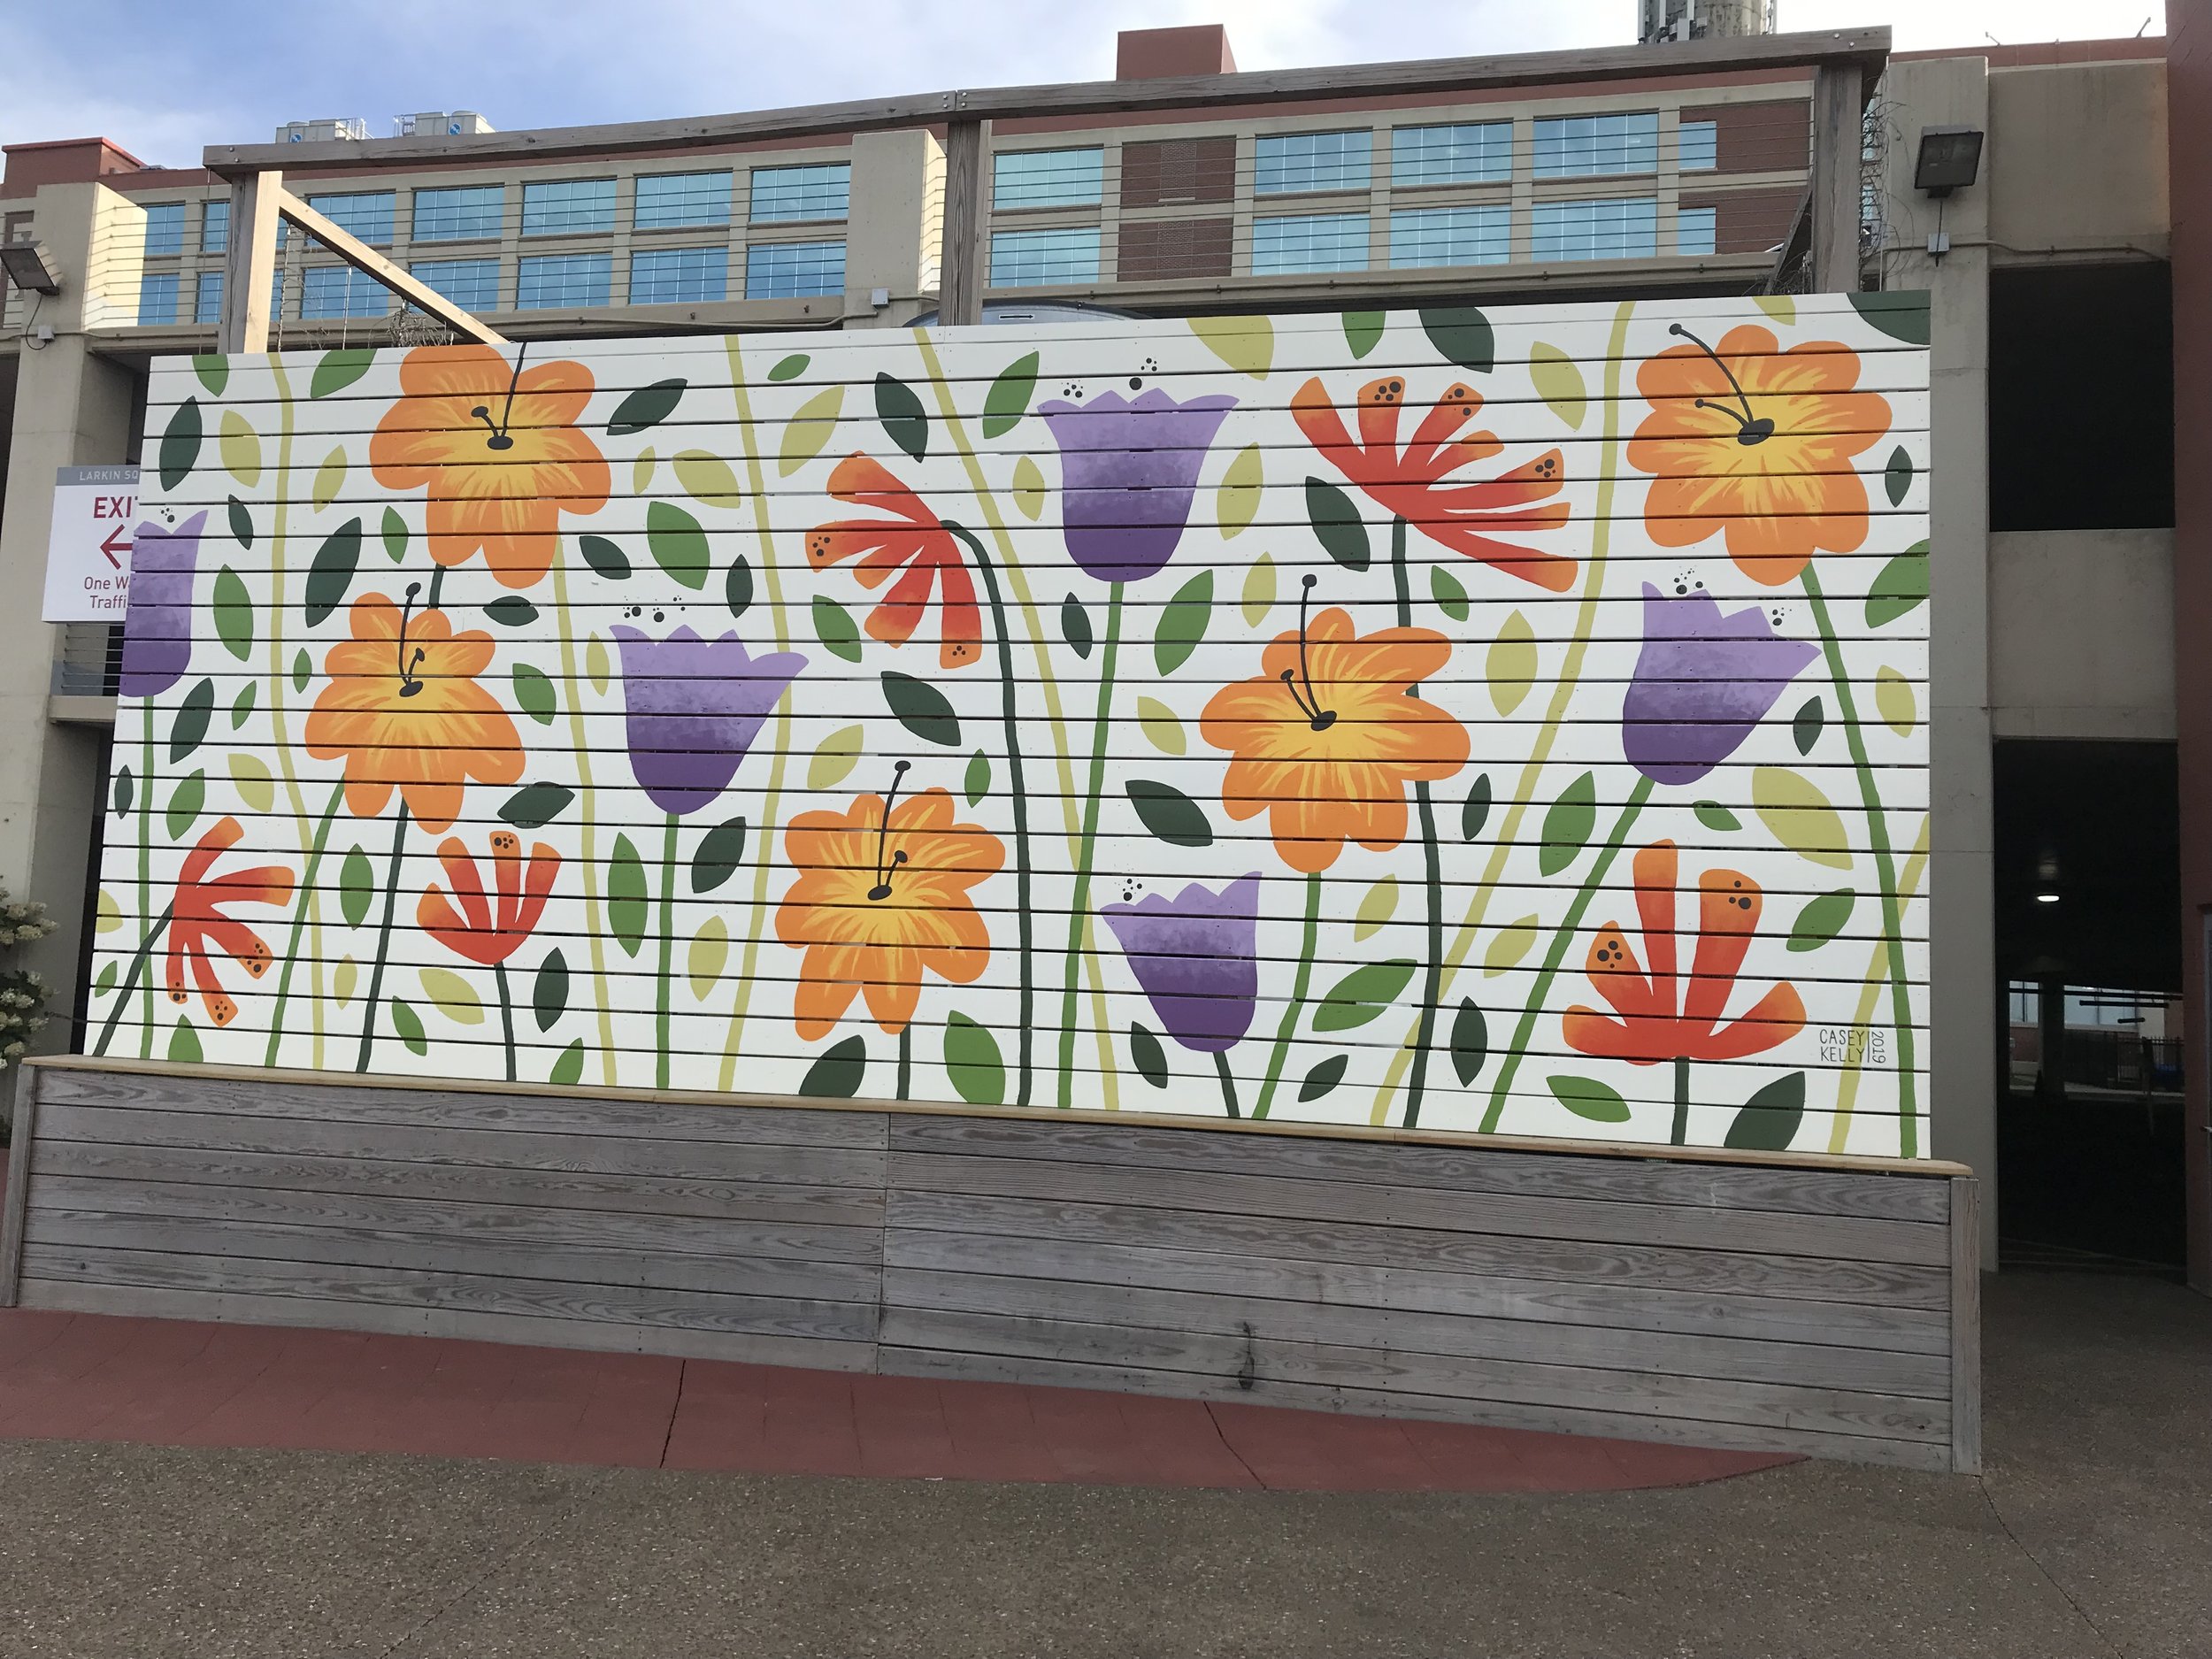 Botanically-inspired murals throughout Buffalo